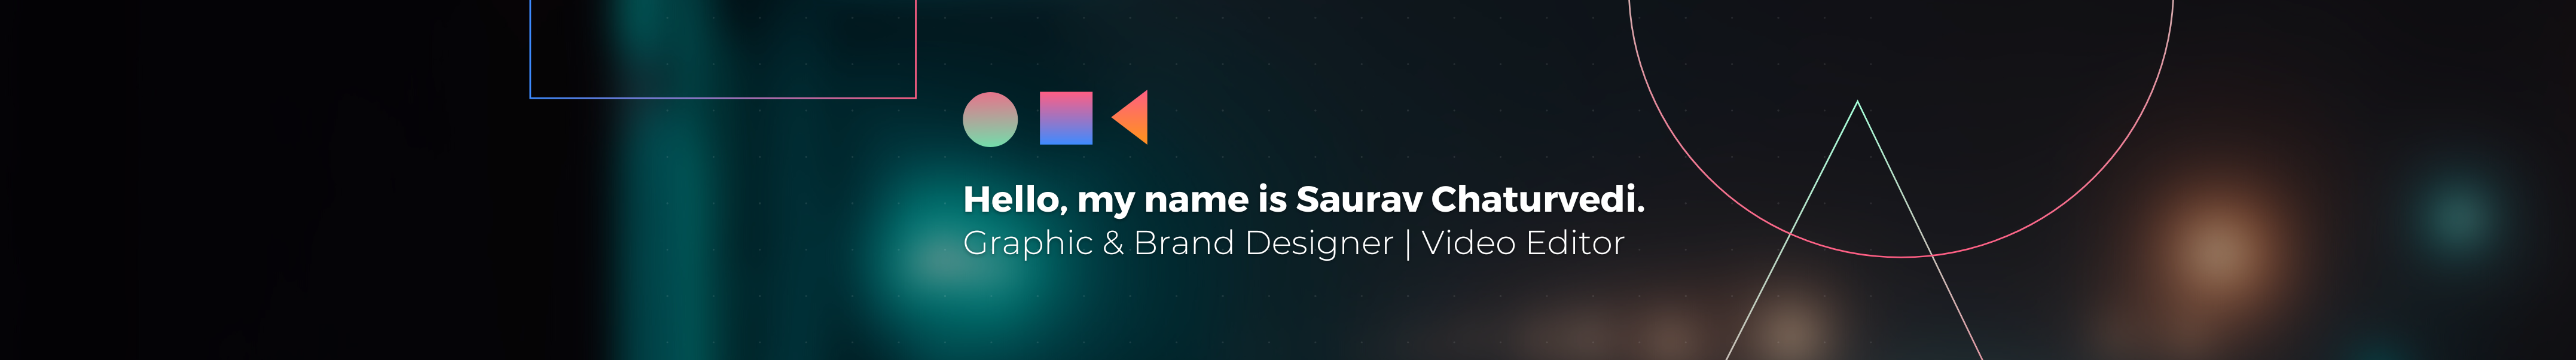 Saurav Chaturvedi's profile banner